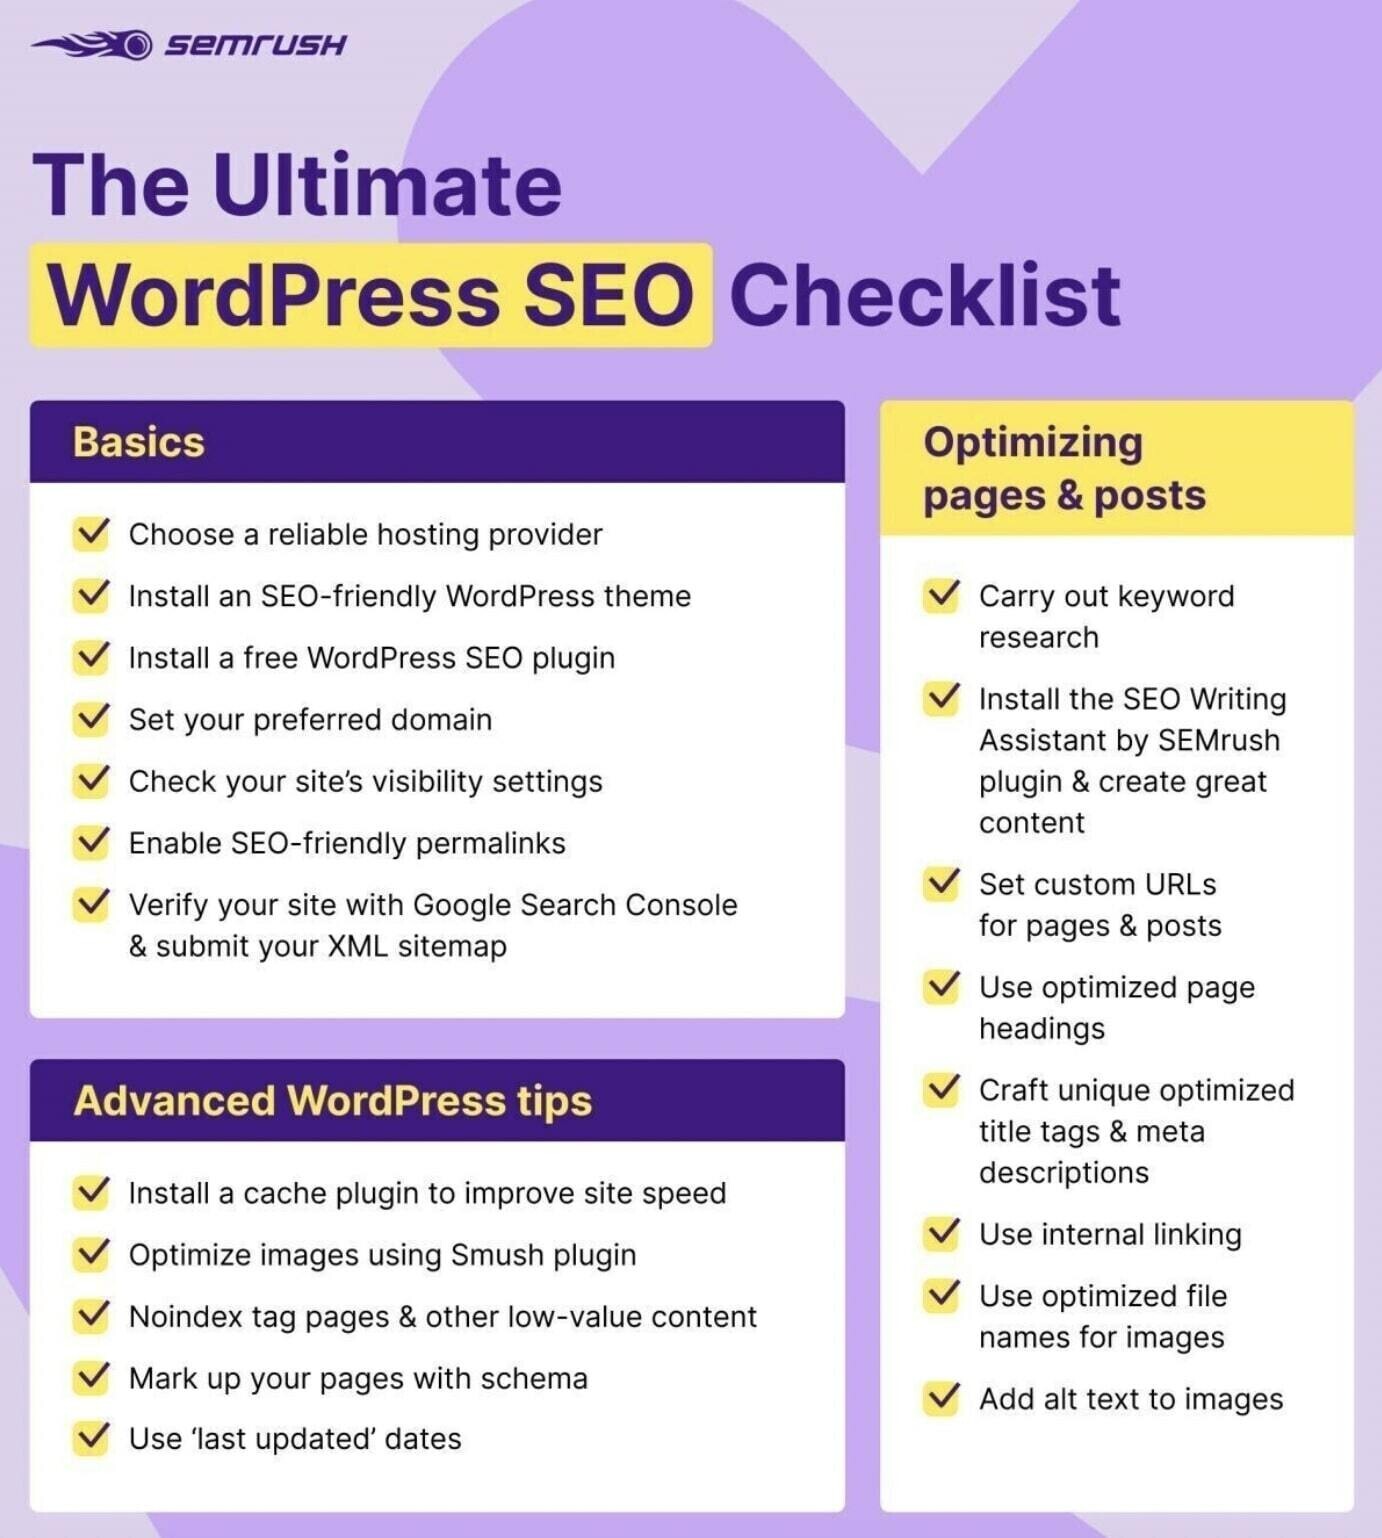 "The Ultimate WordPress SEO Checklist" infographic by Semrush